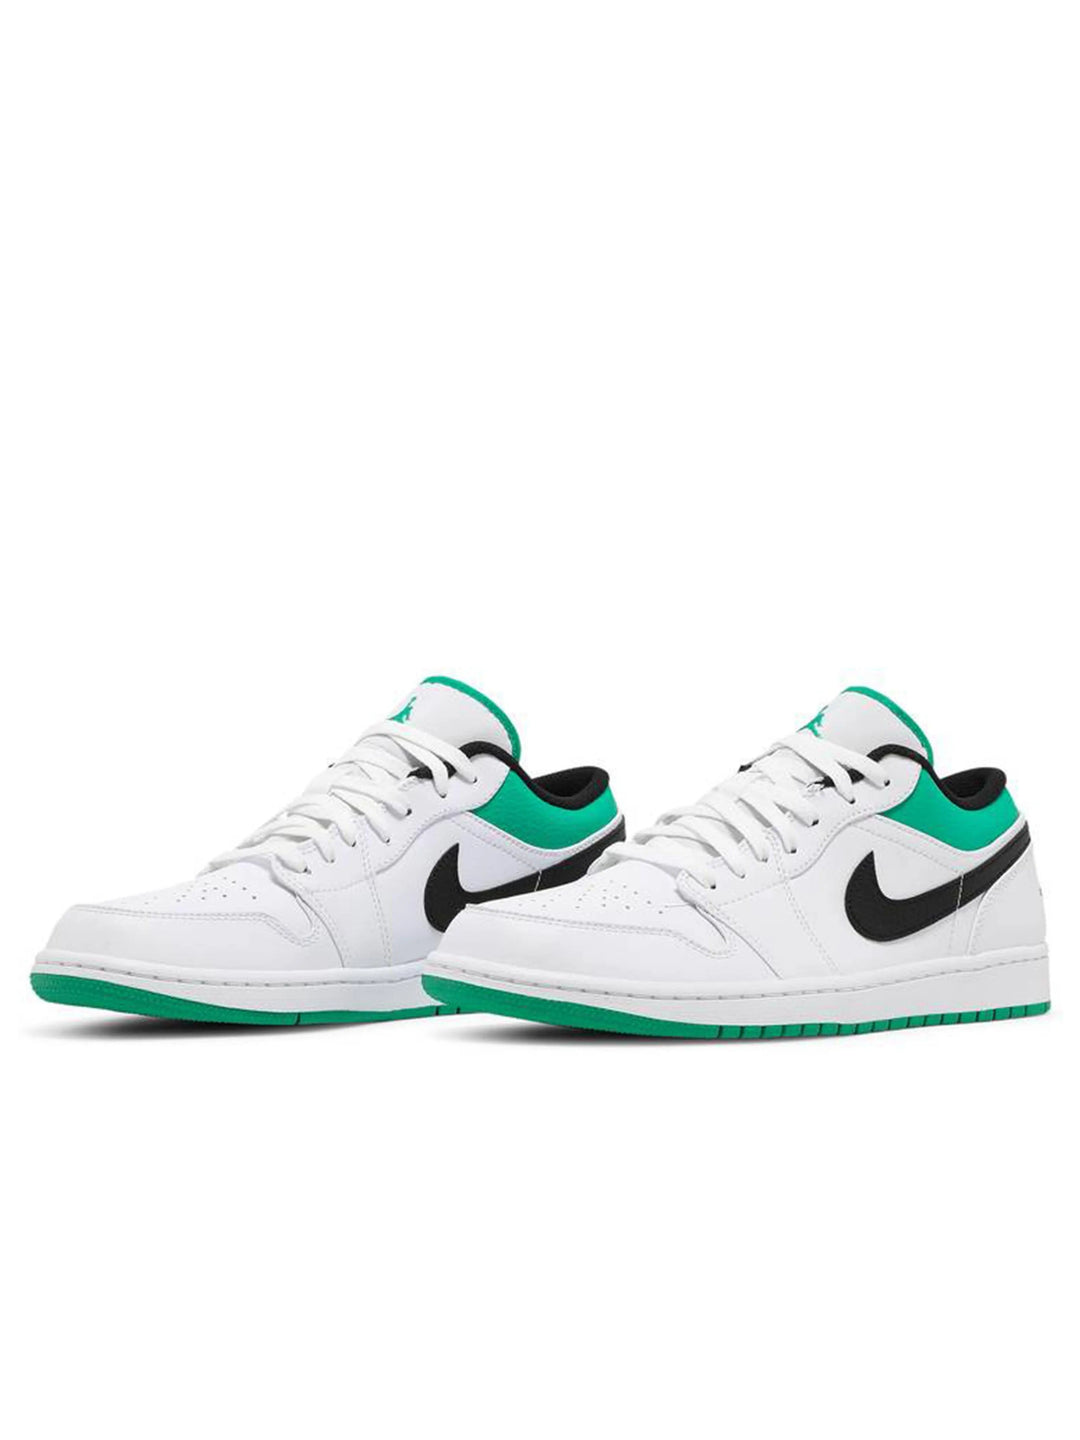 Nike Air Jordan 1 Low White Lucky Green Prior